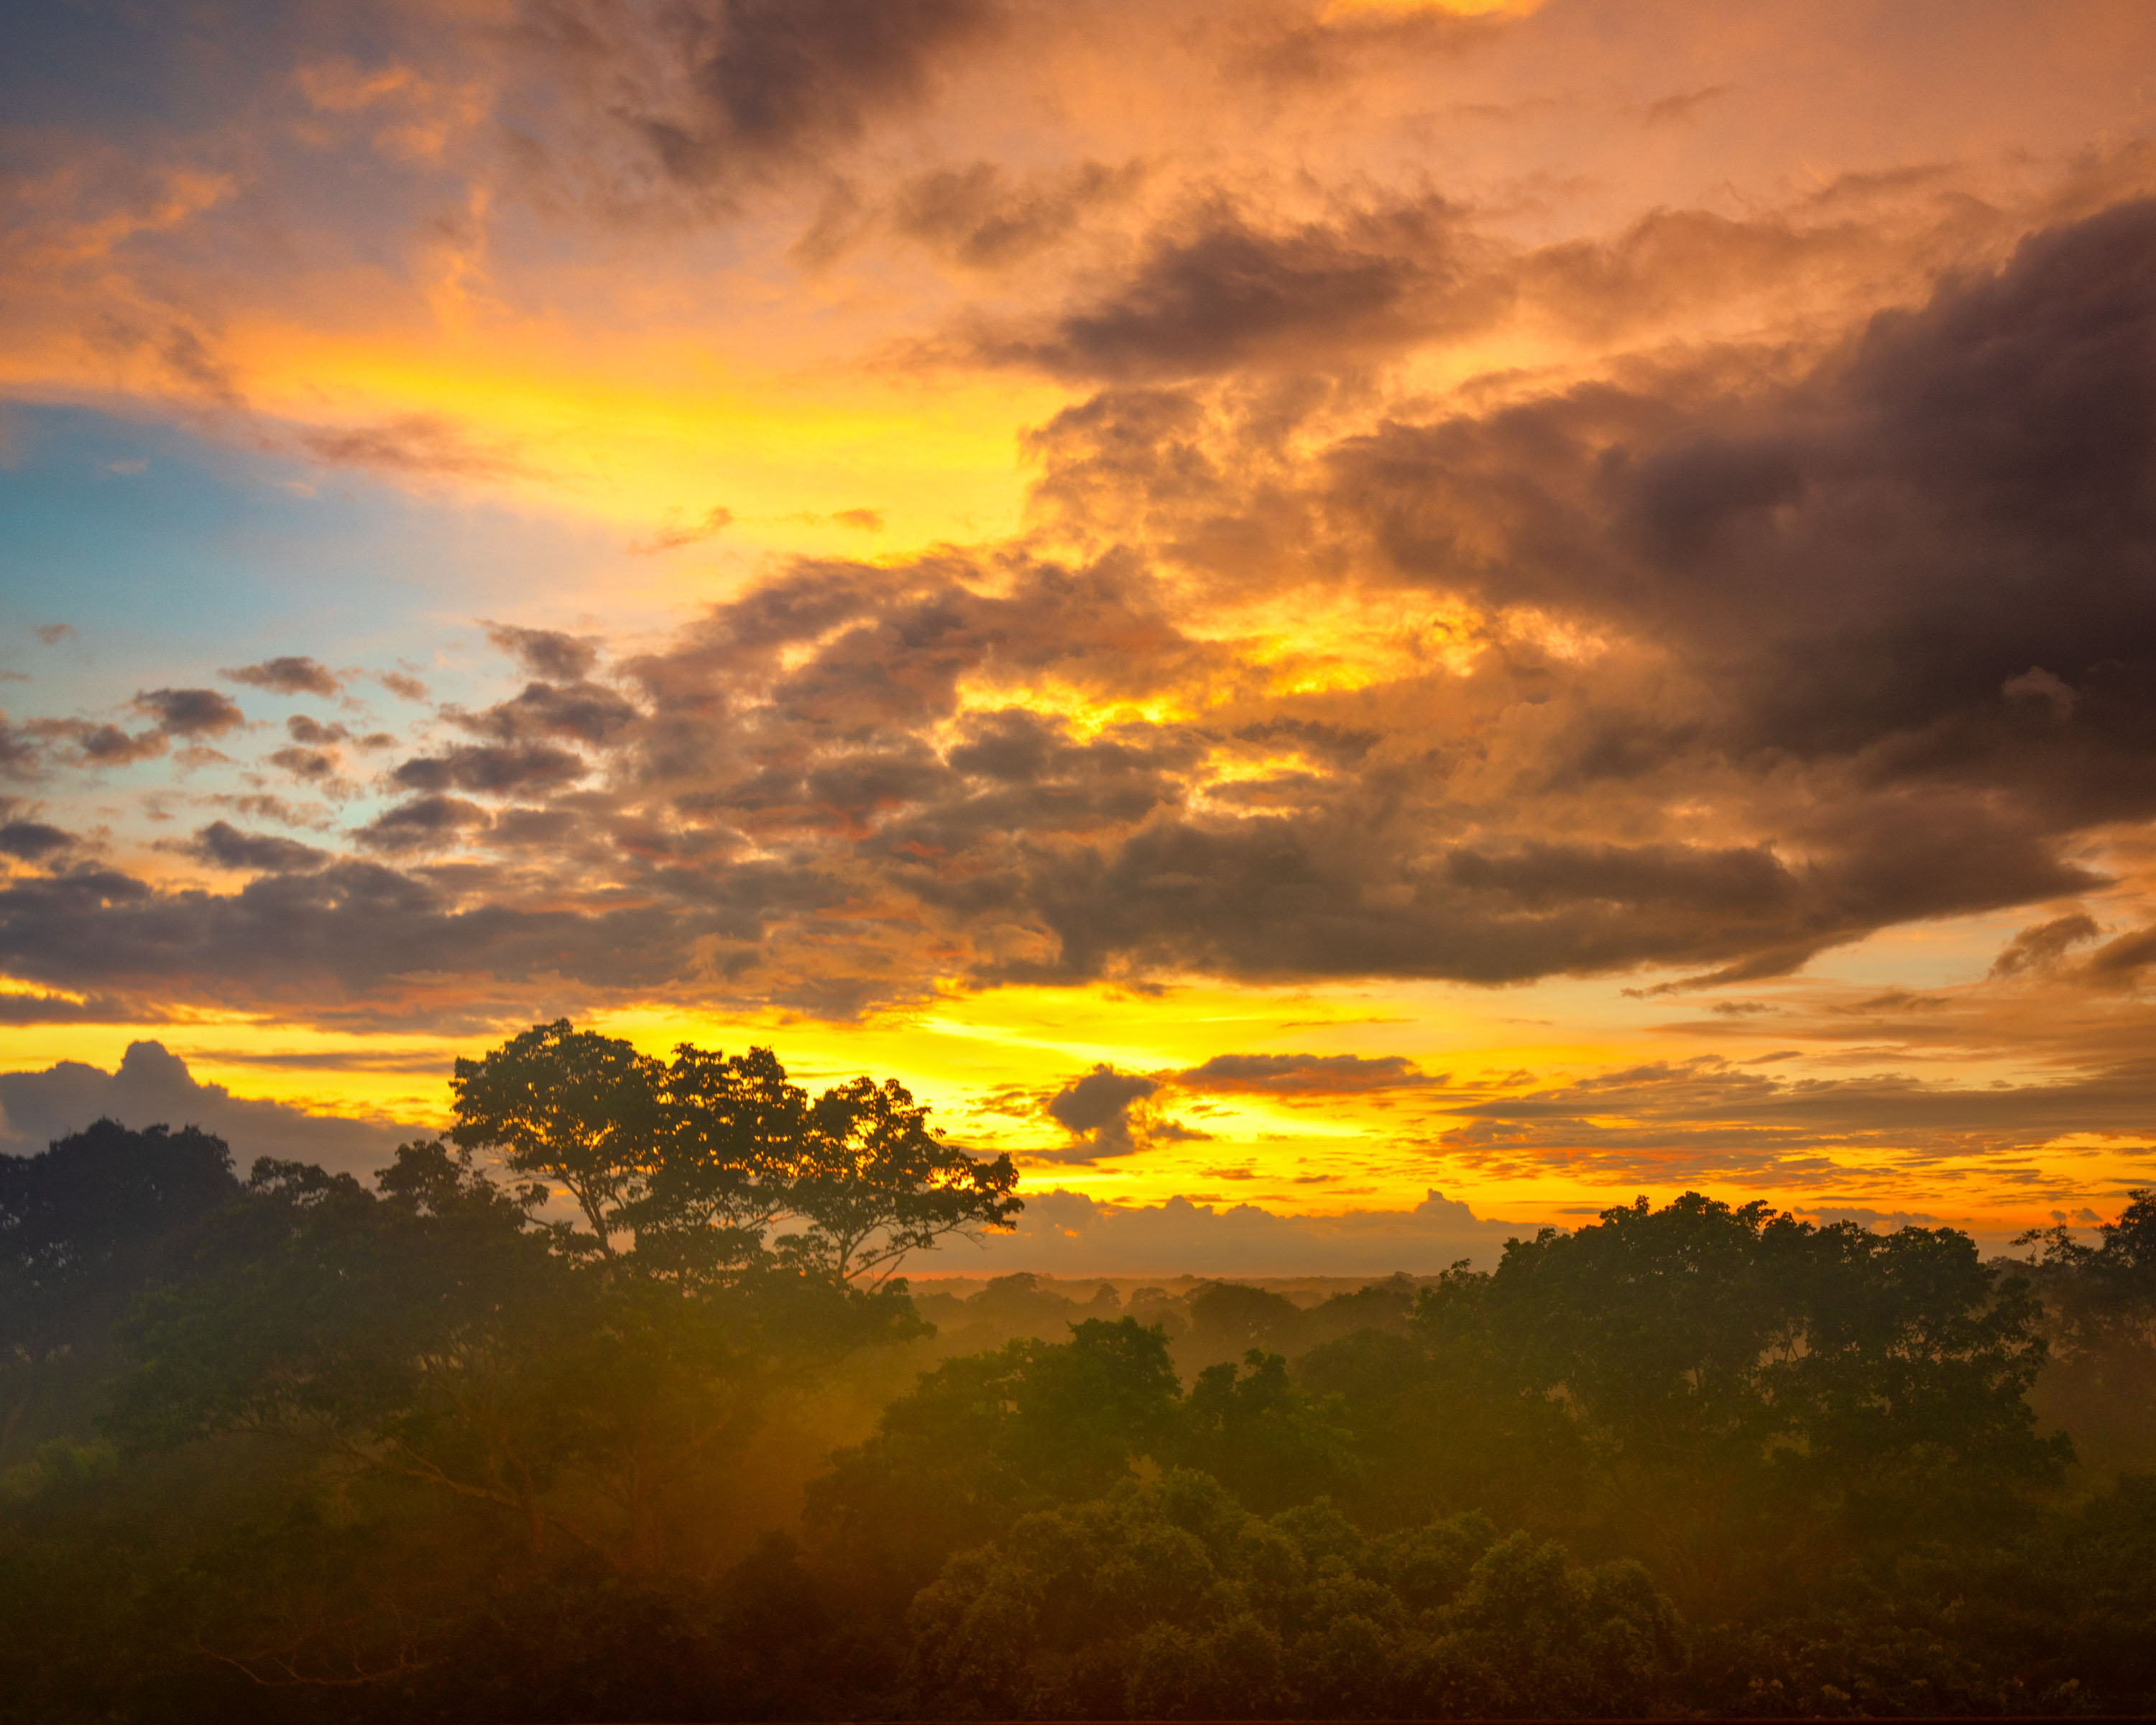 The sunrise over the Amazon Rainforest